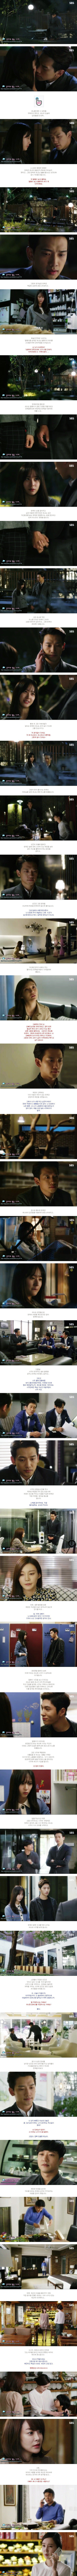 episode 9 captures for the Korean drama 'My Lovely Girl'